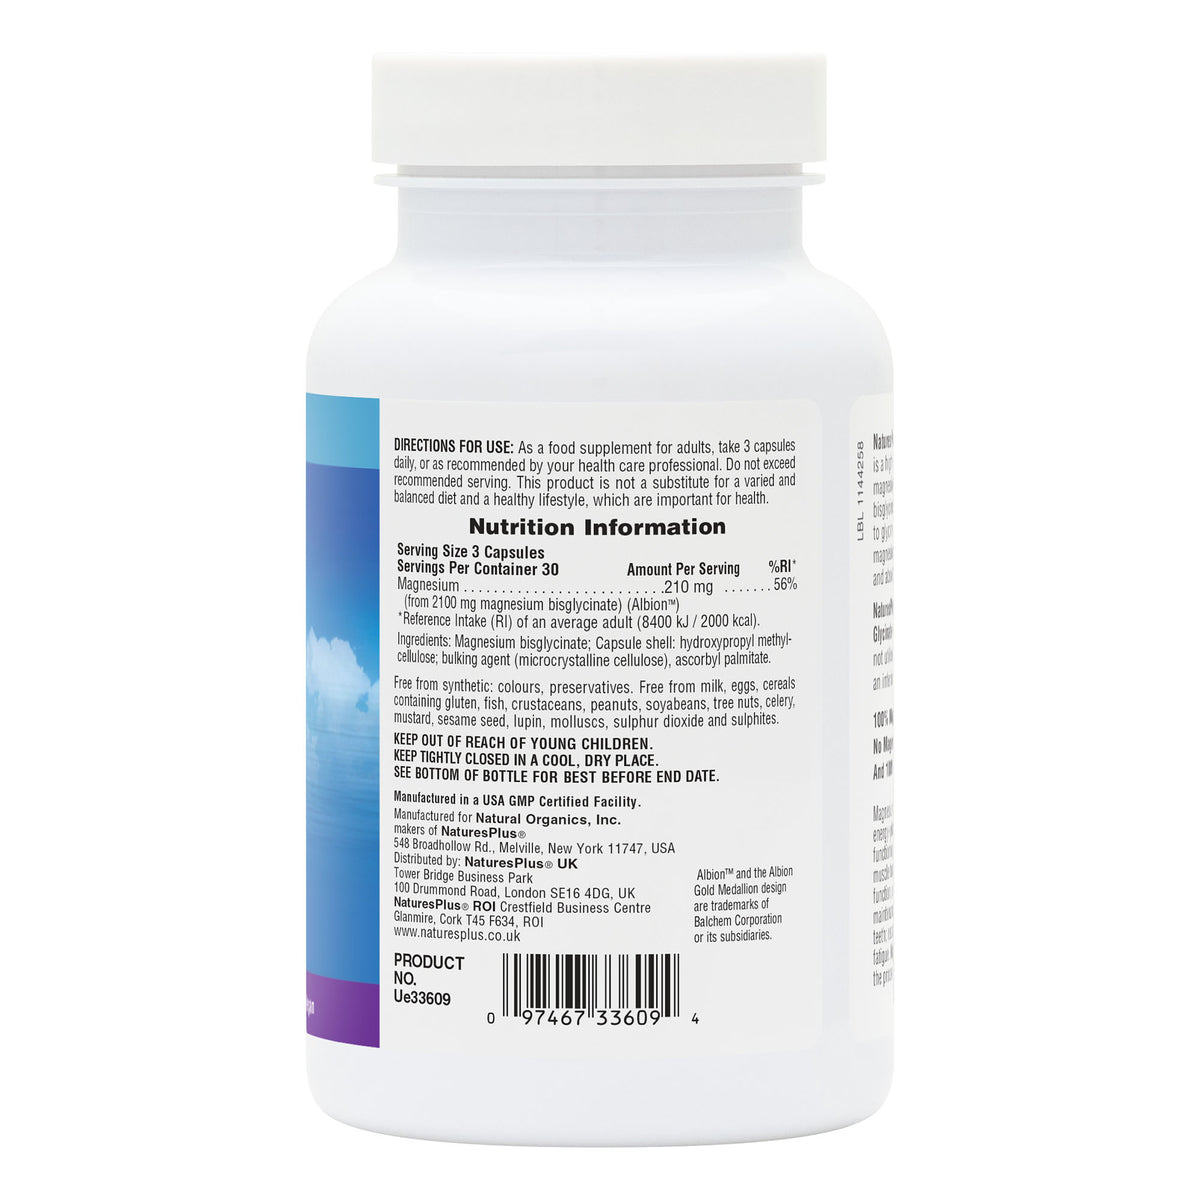 product image of Magnesium Glycinate Capsules containing Magnesium Glycinate Capsules